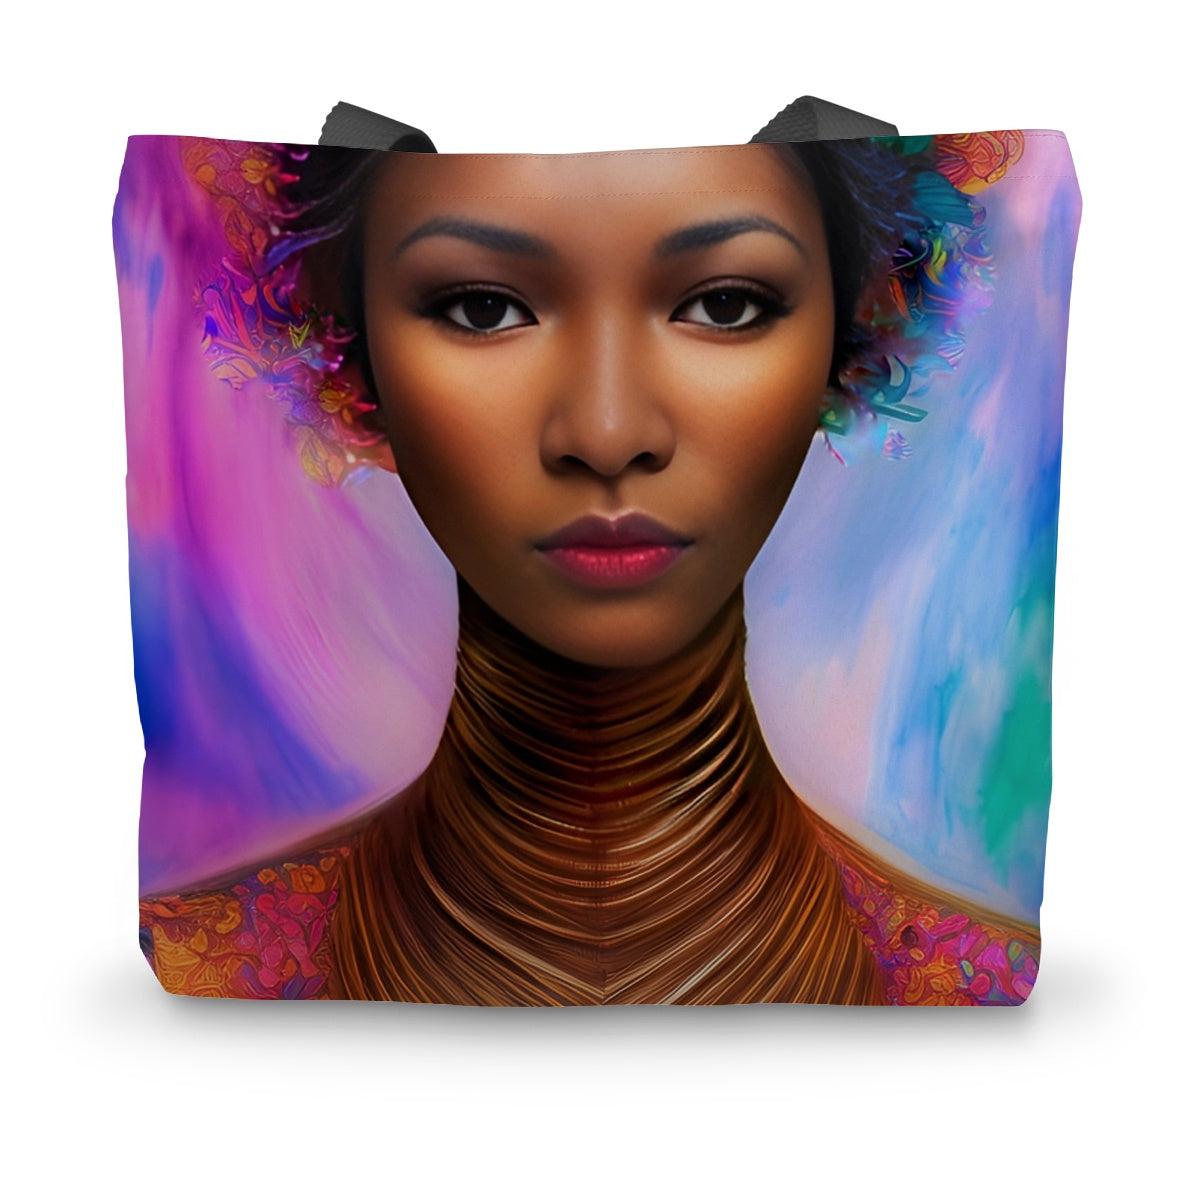 Goddess Petal Canvas Tote Bag